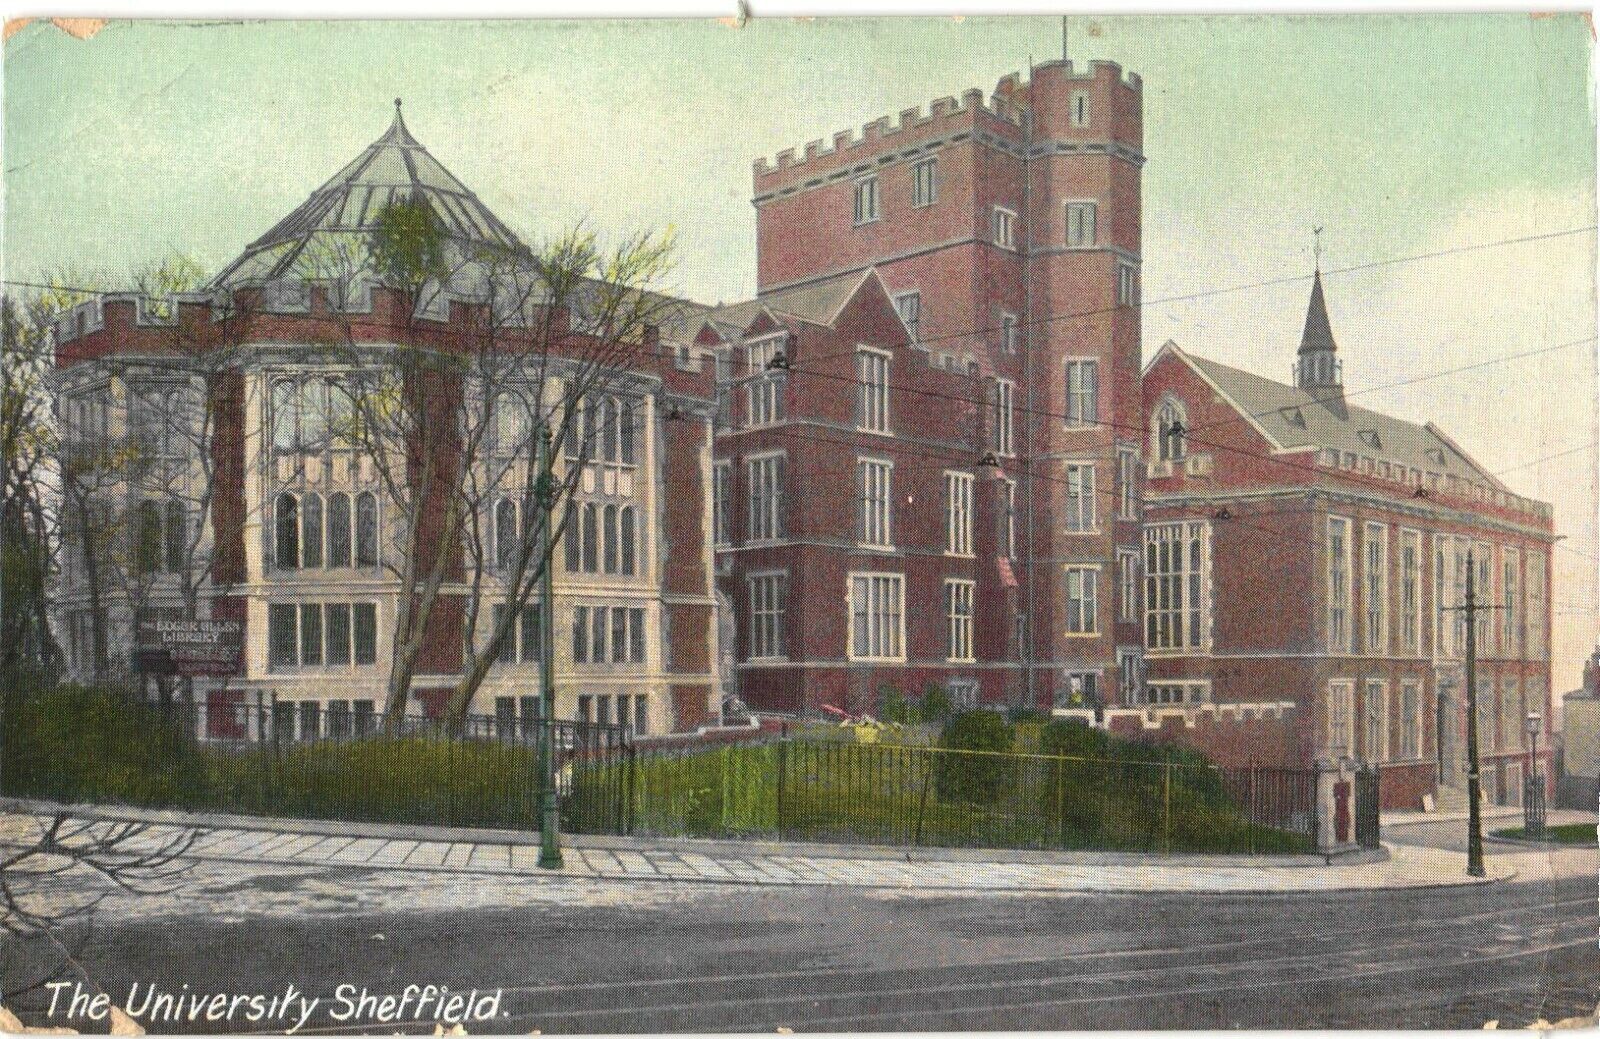 Façade of The University of Sheffield, England Postcard